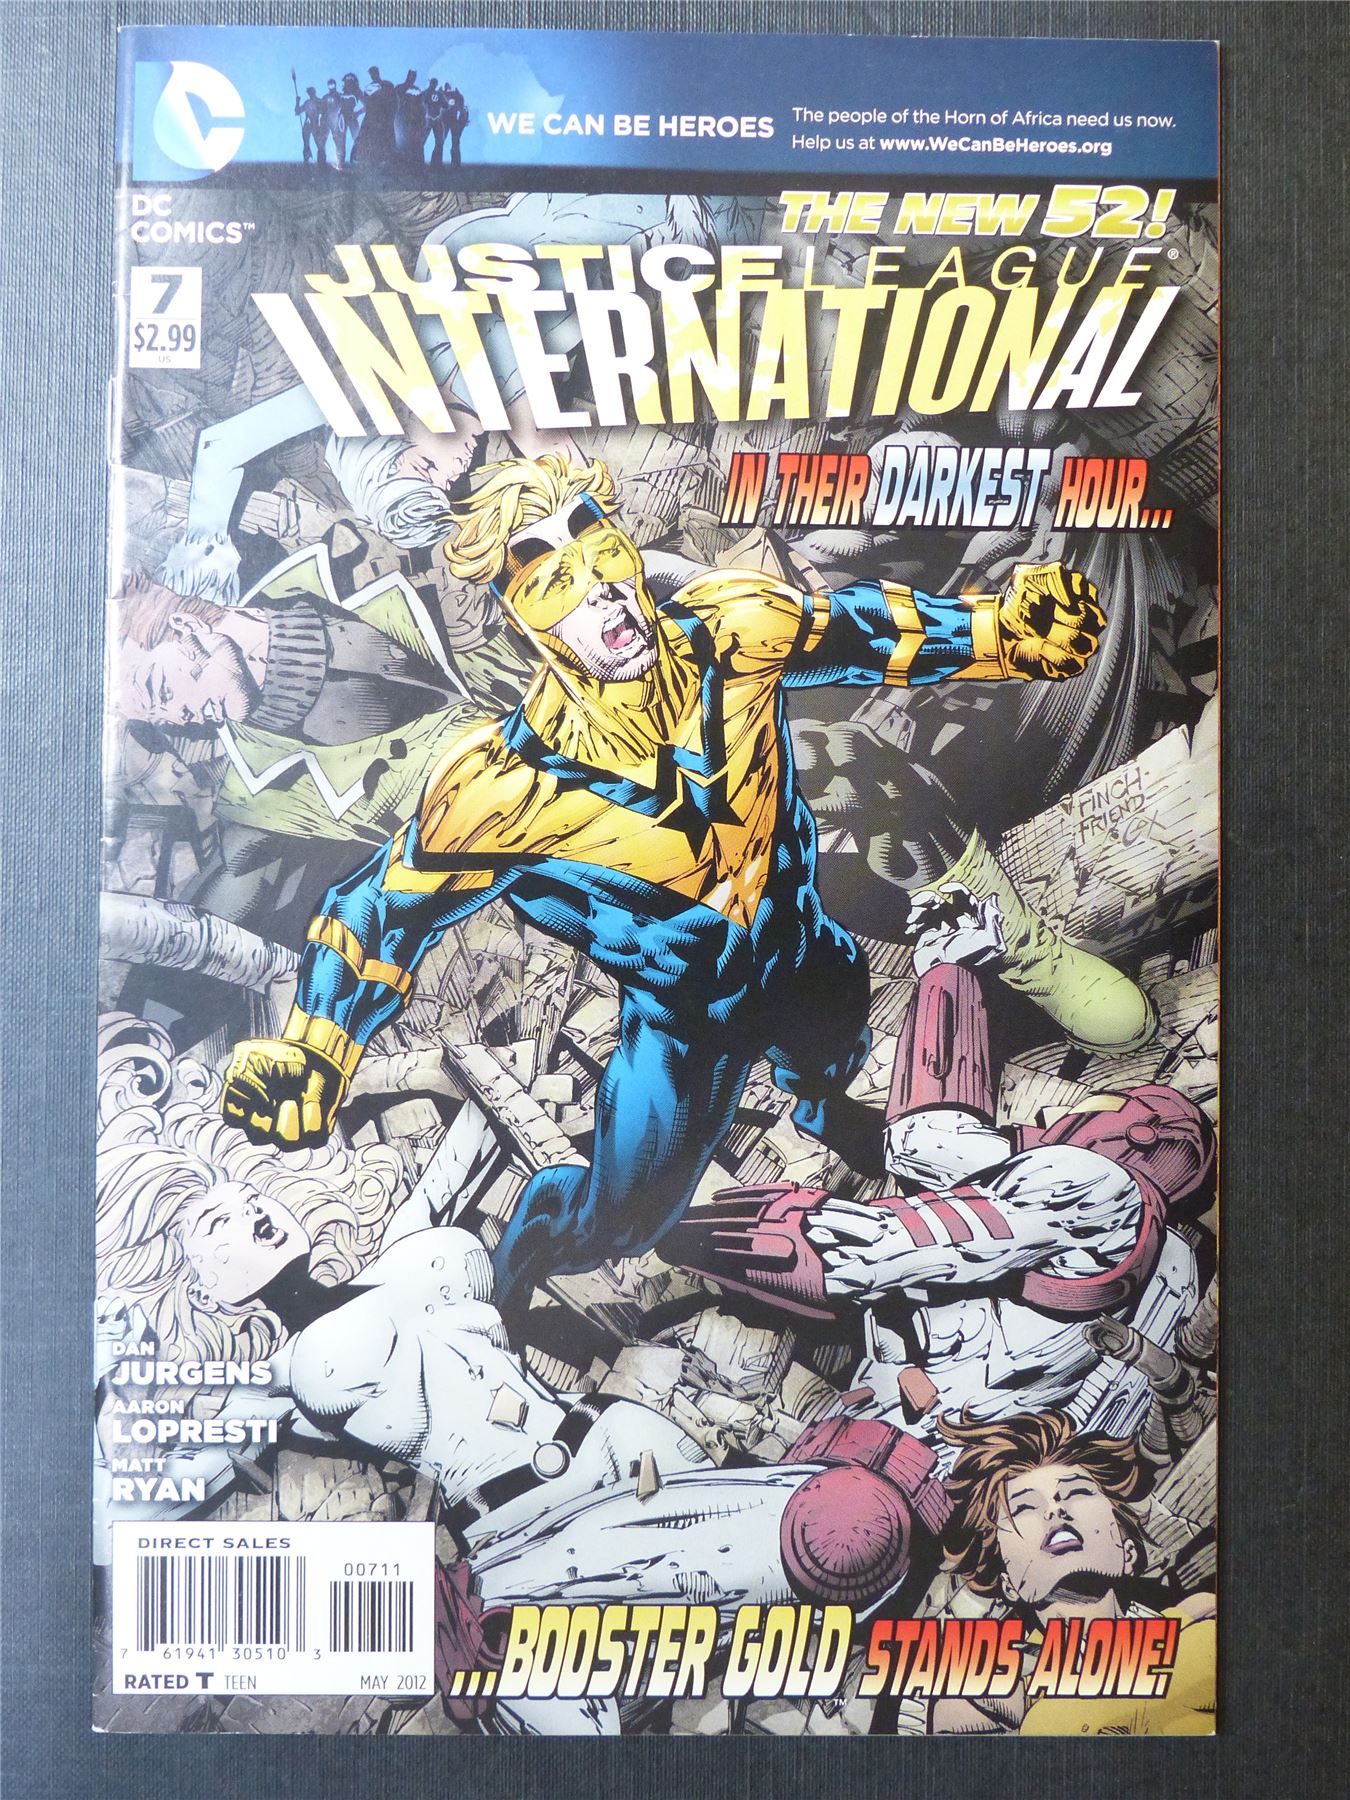 JUSTICE League International #7 - DC Comics #5G6